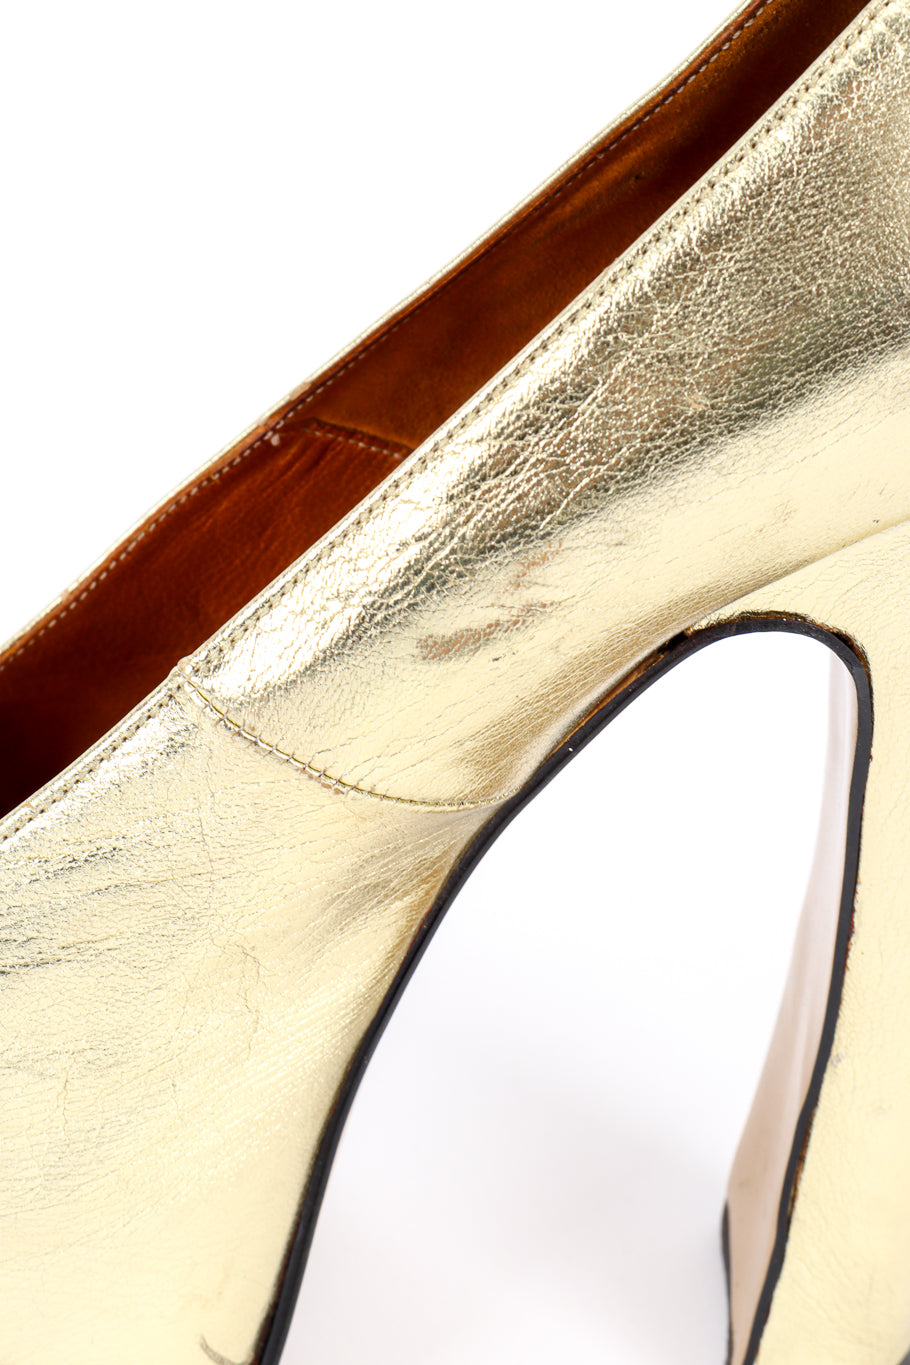 Vintage Vivienne Westwood 1993 F/W Metallic Gold Elevated Court Shoe right shoe inner upper leather closeup @recessla